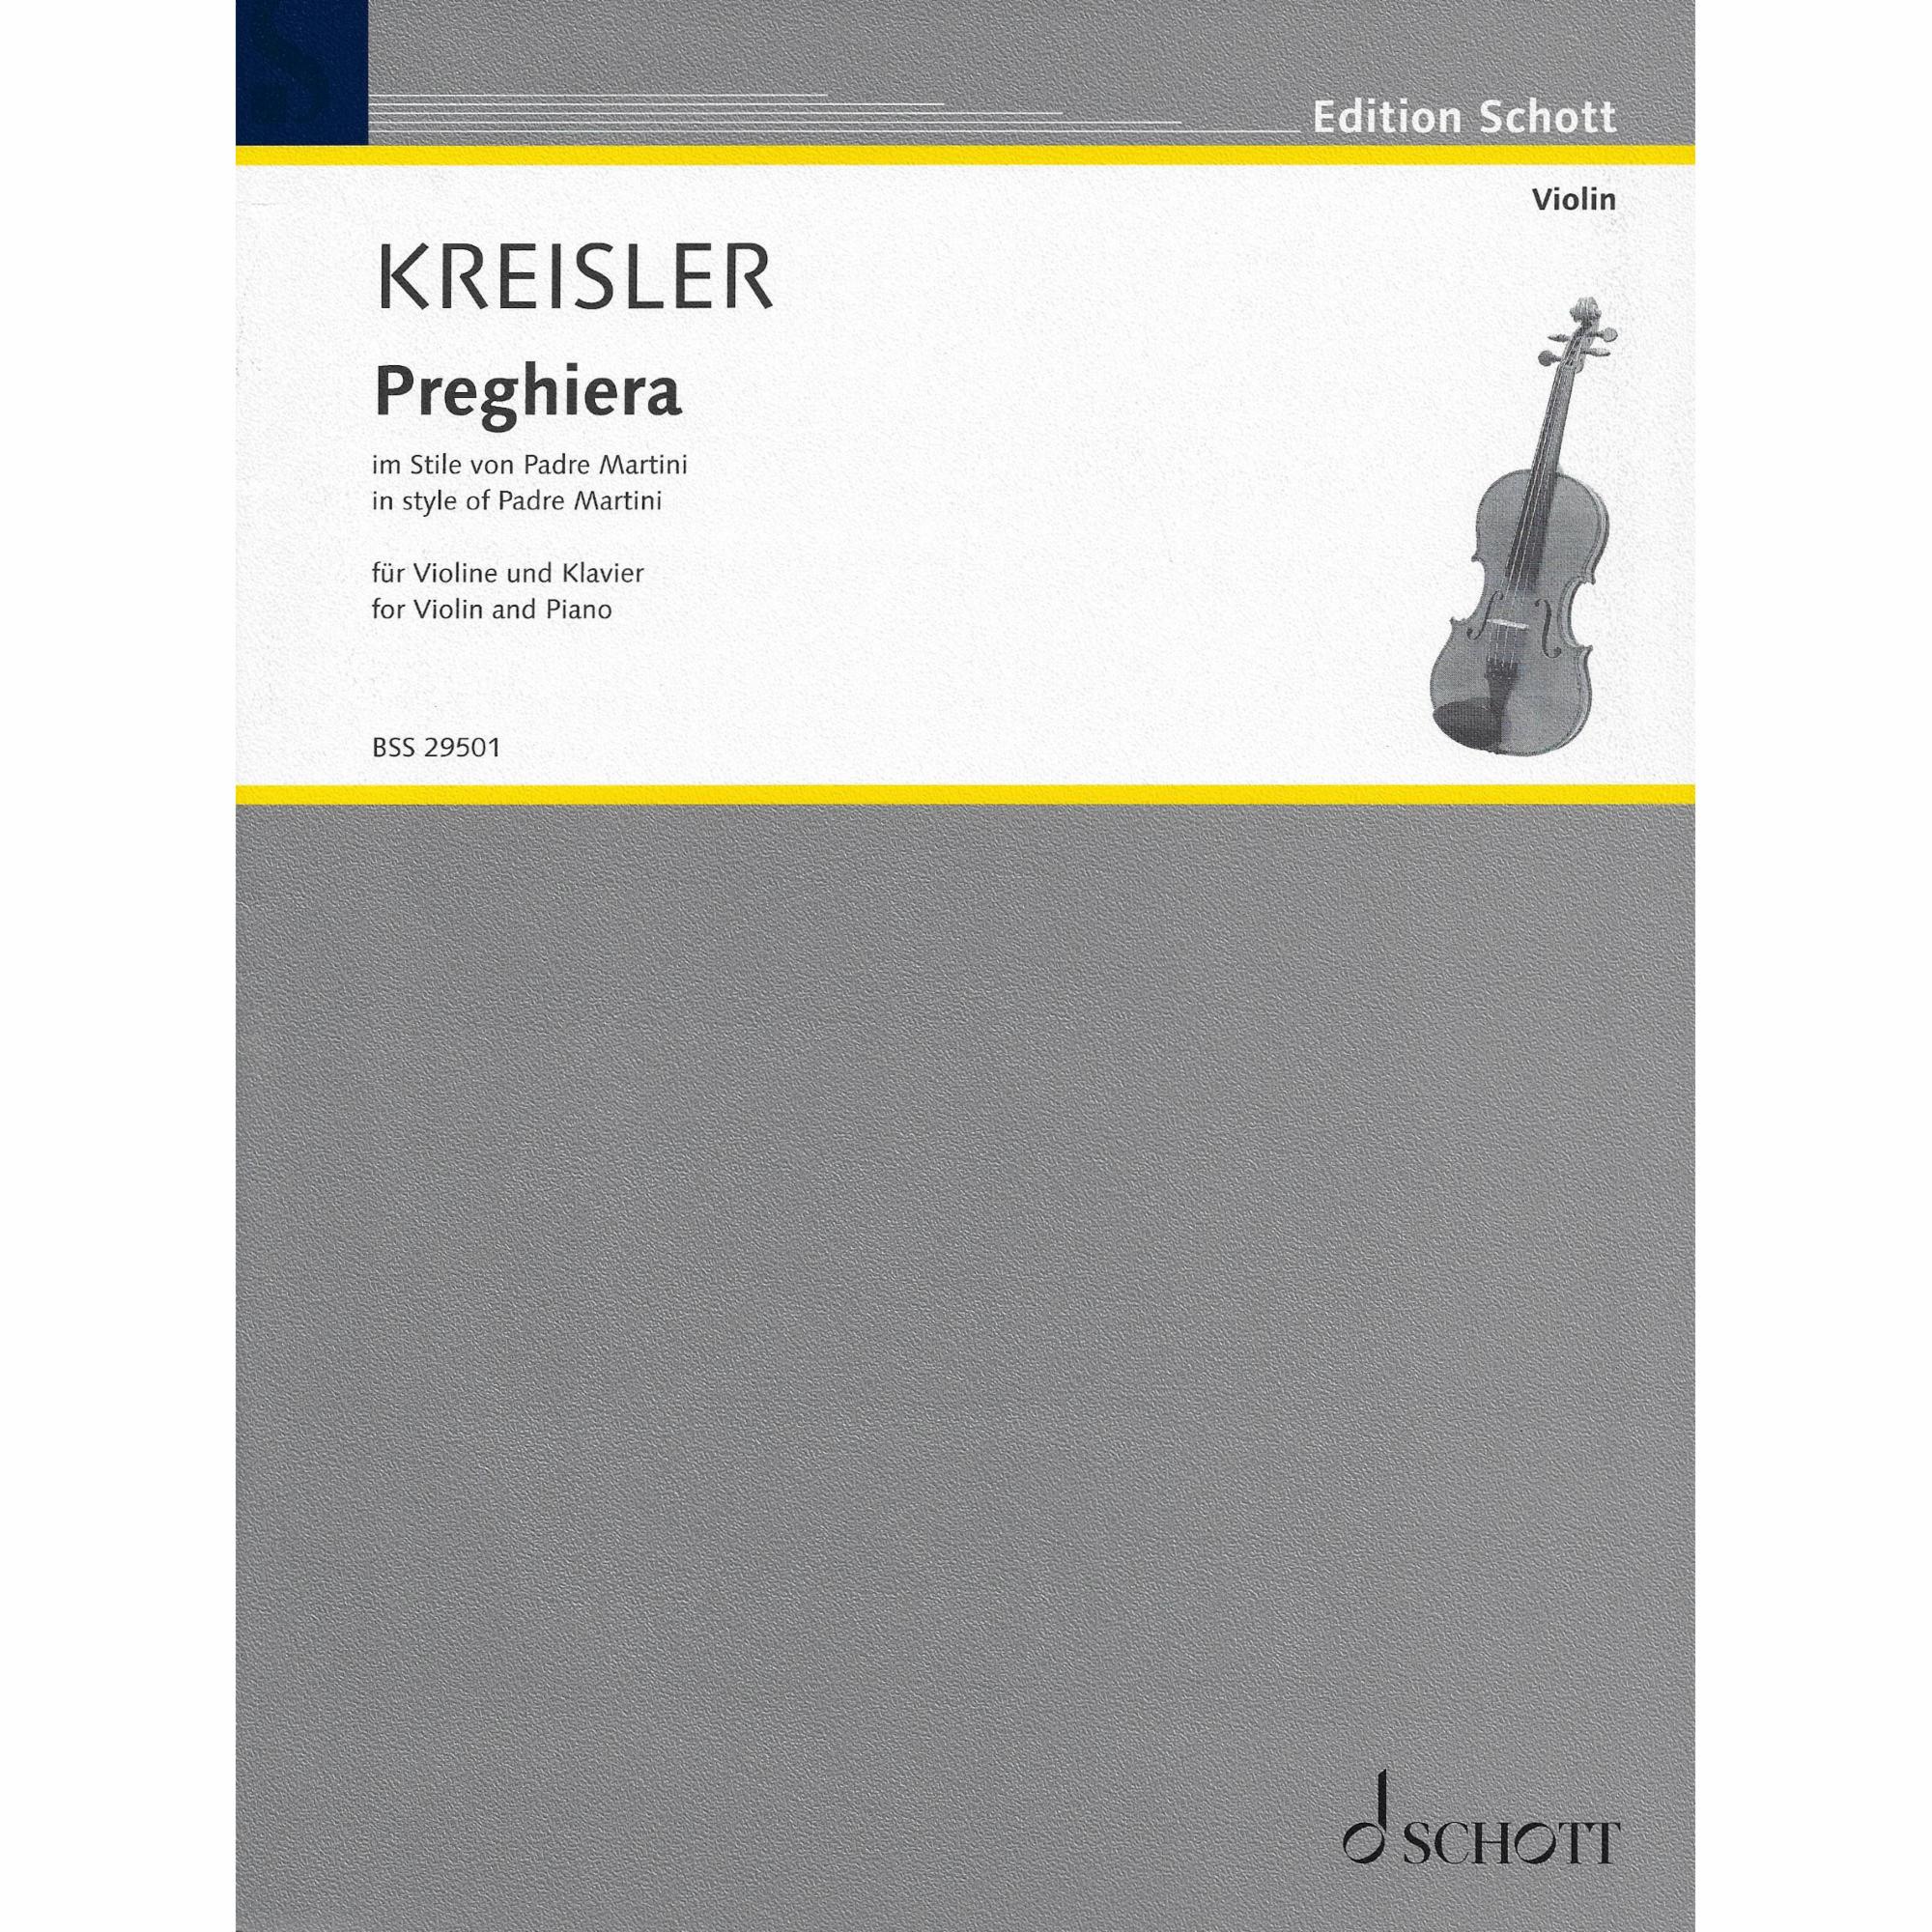 Kreisler -- Preghiera for Violin and Piano